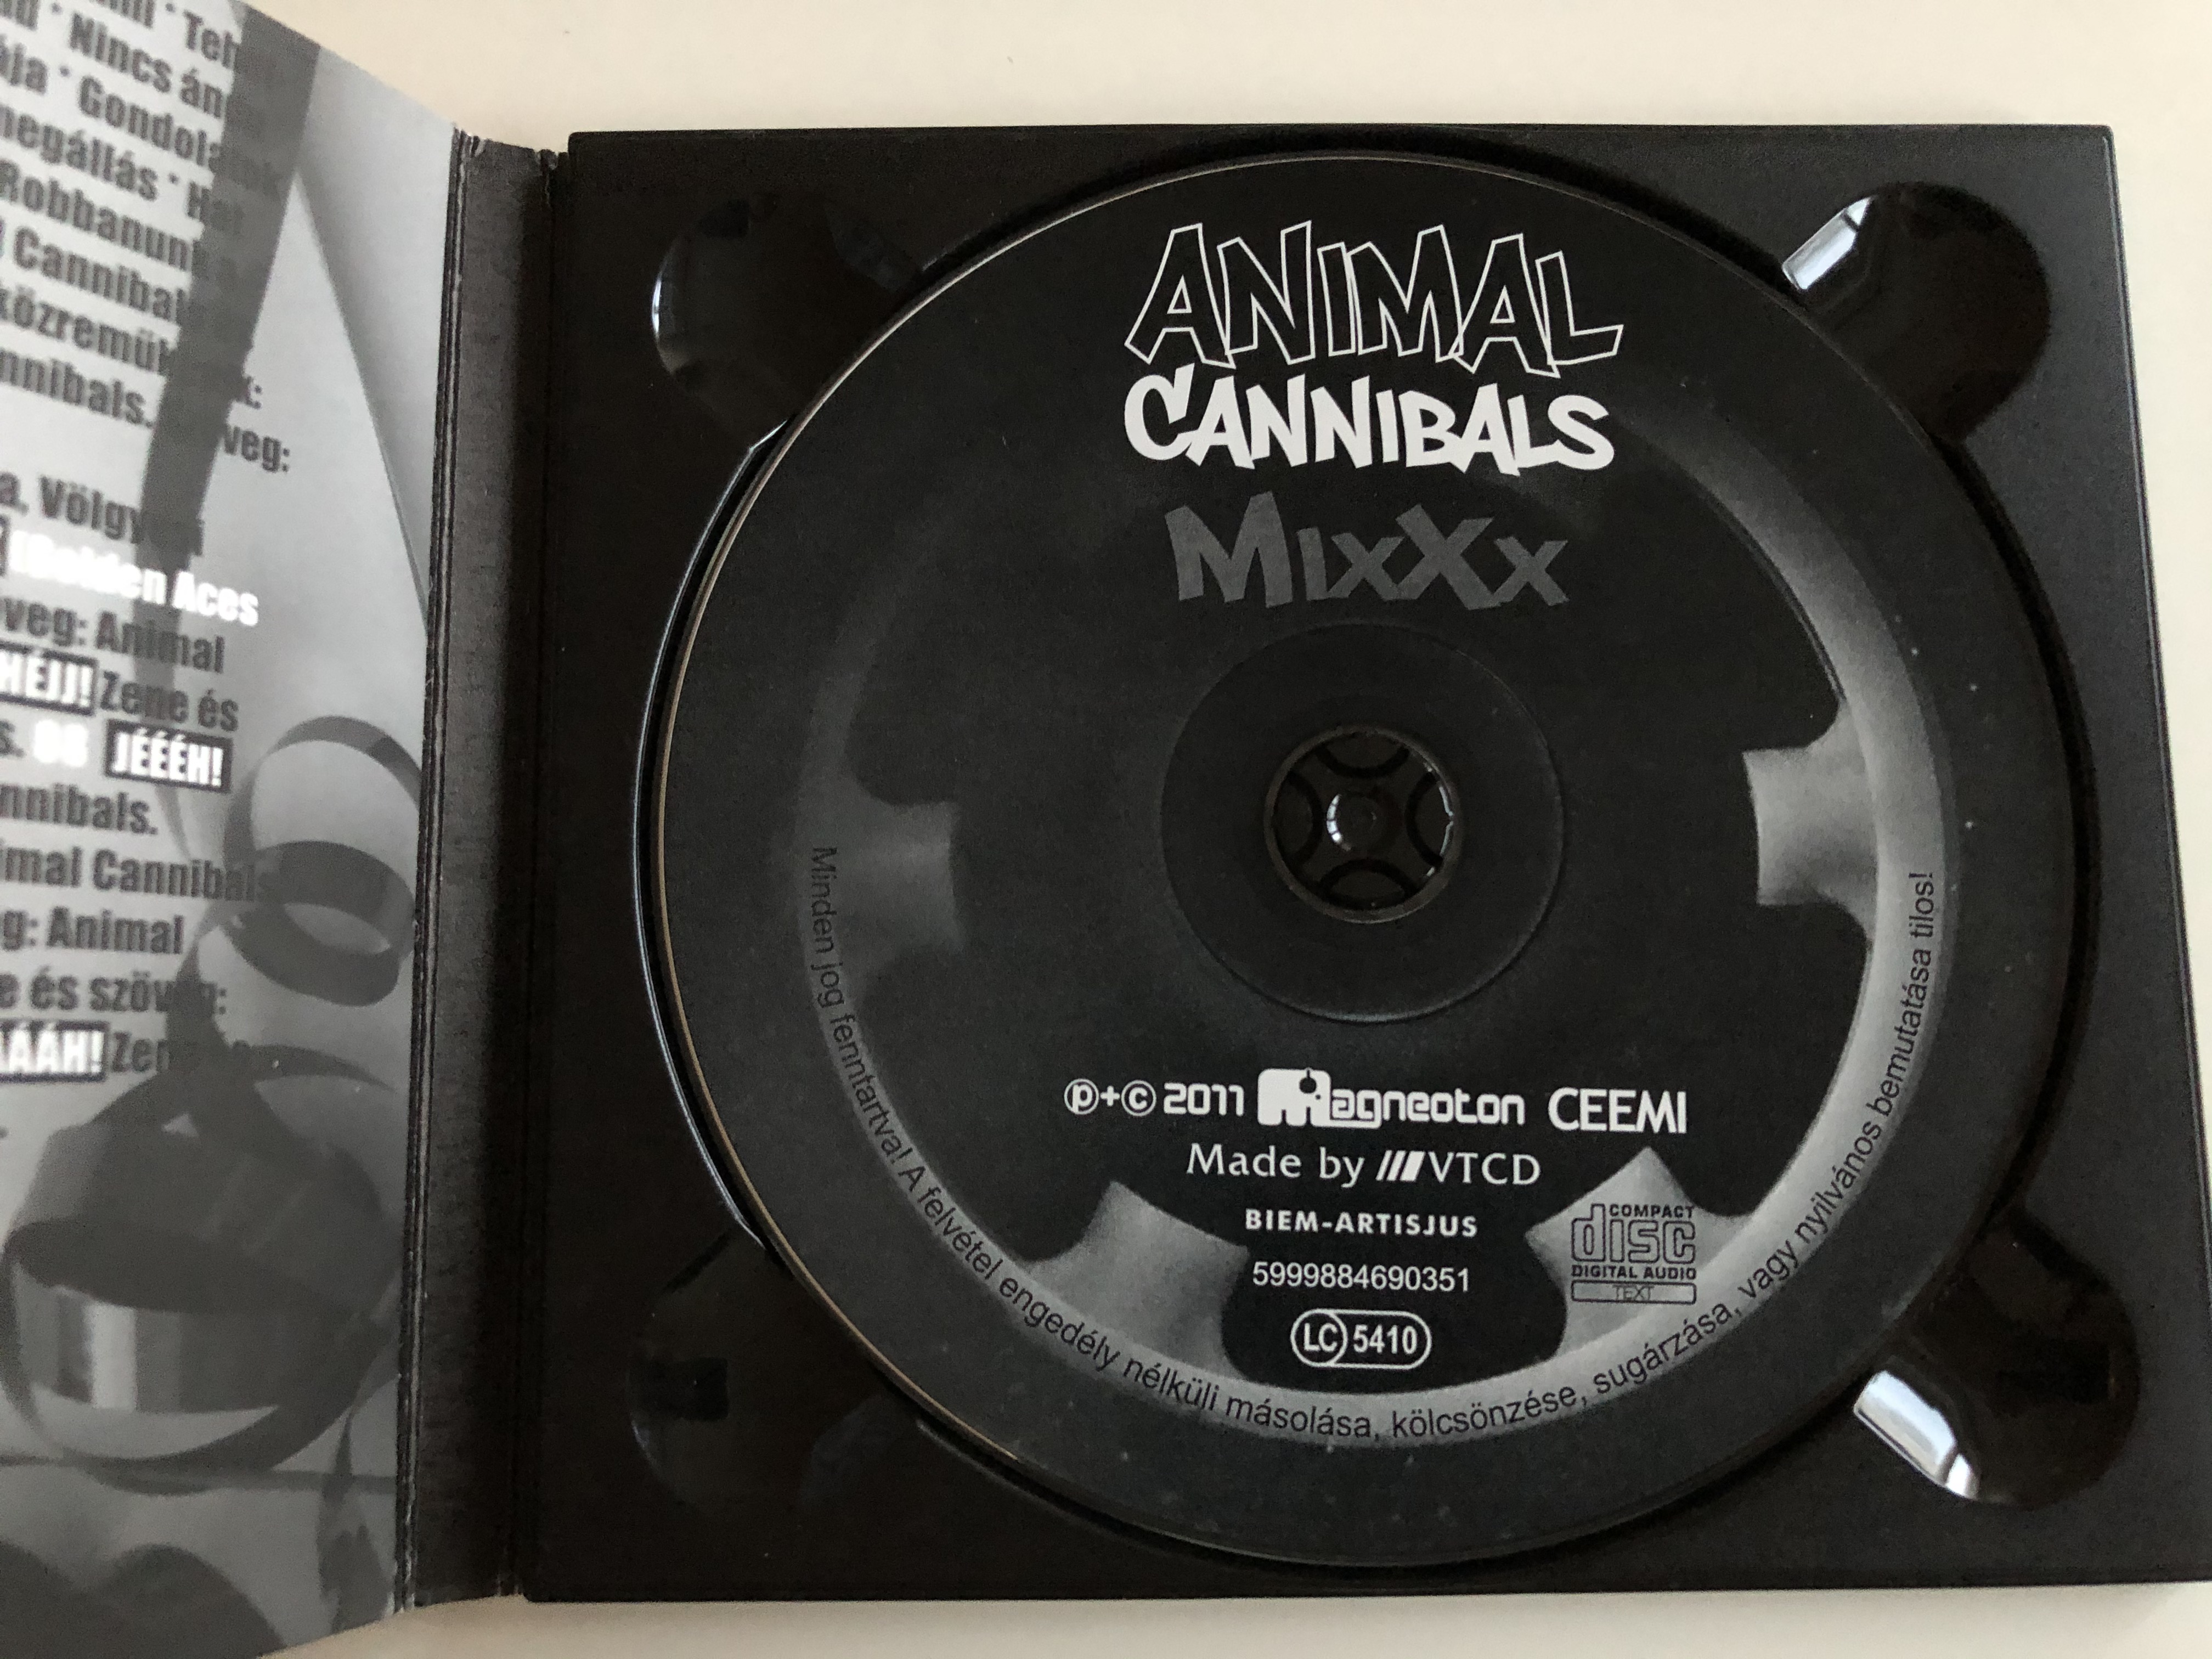 animal-cannibals-mixxx-magneoton-audio-cd-2011-5999884690351-3-.jpg